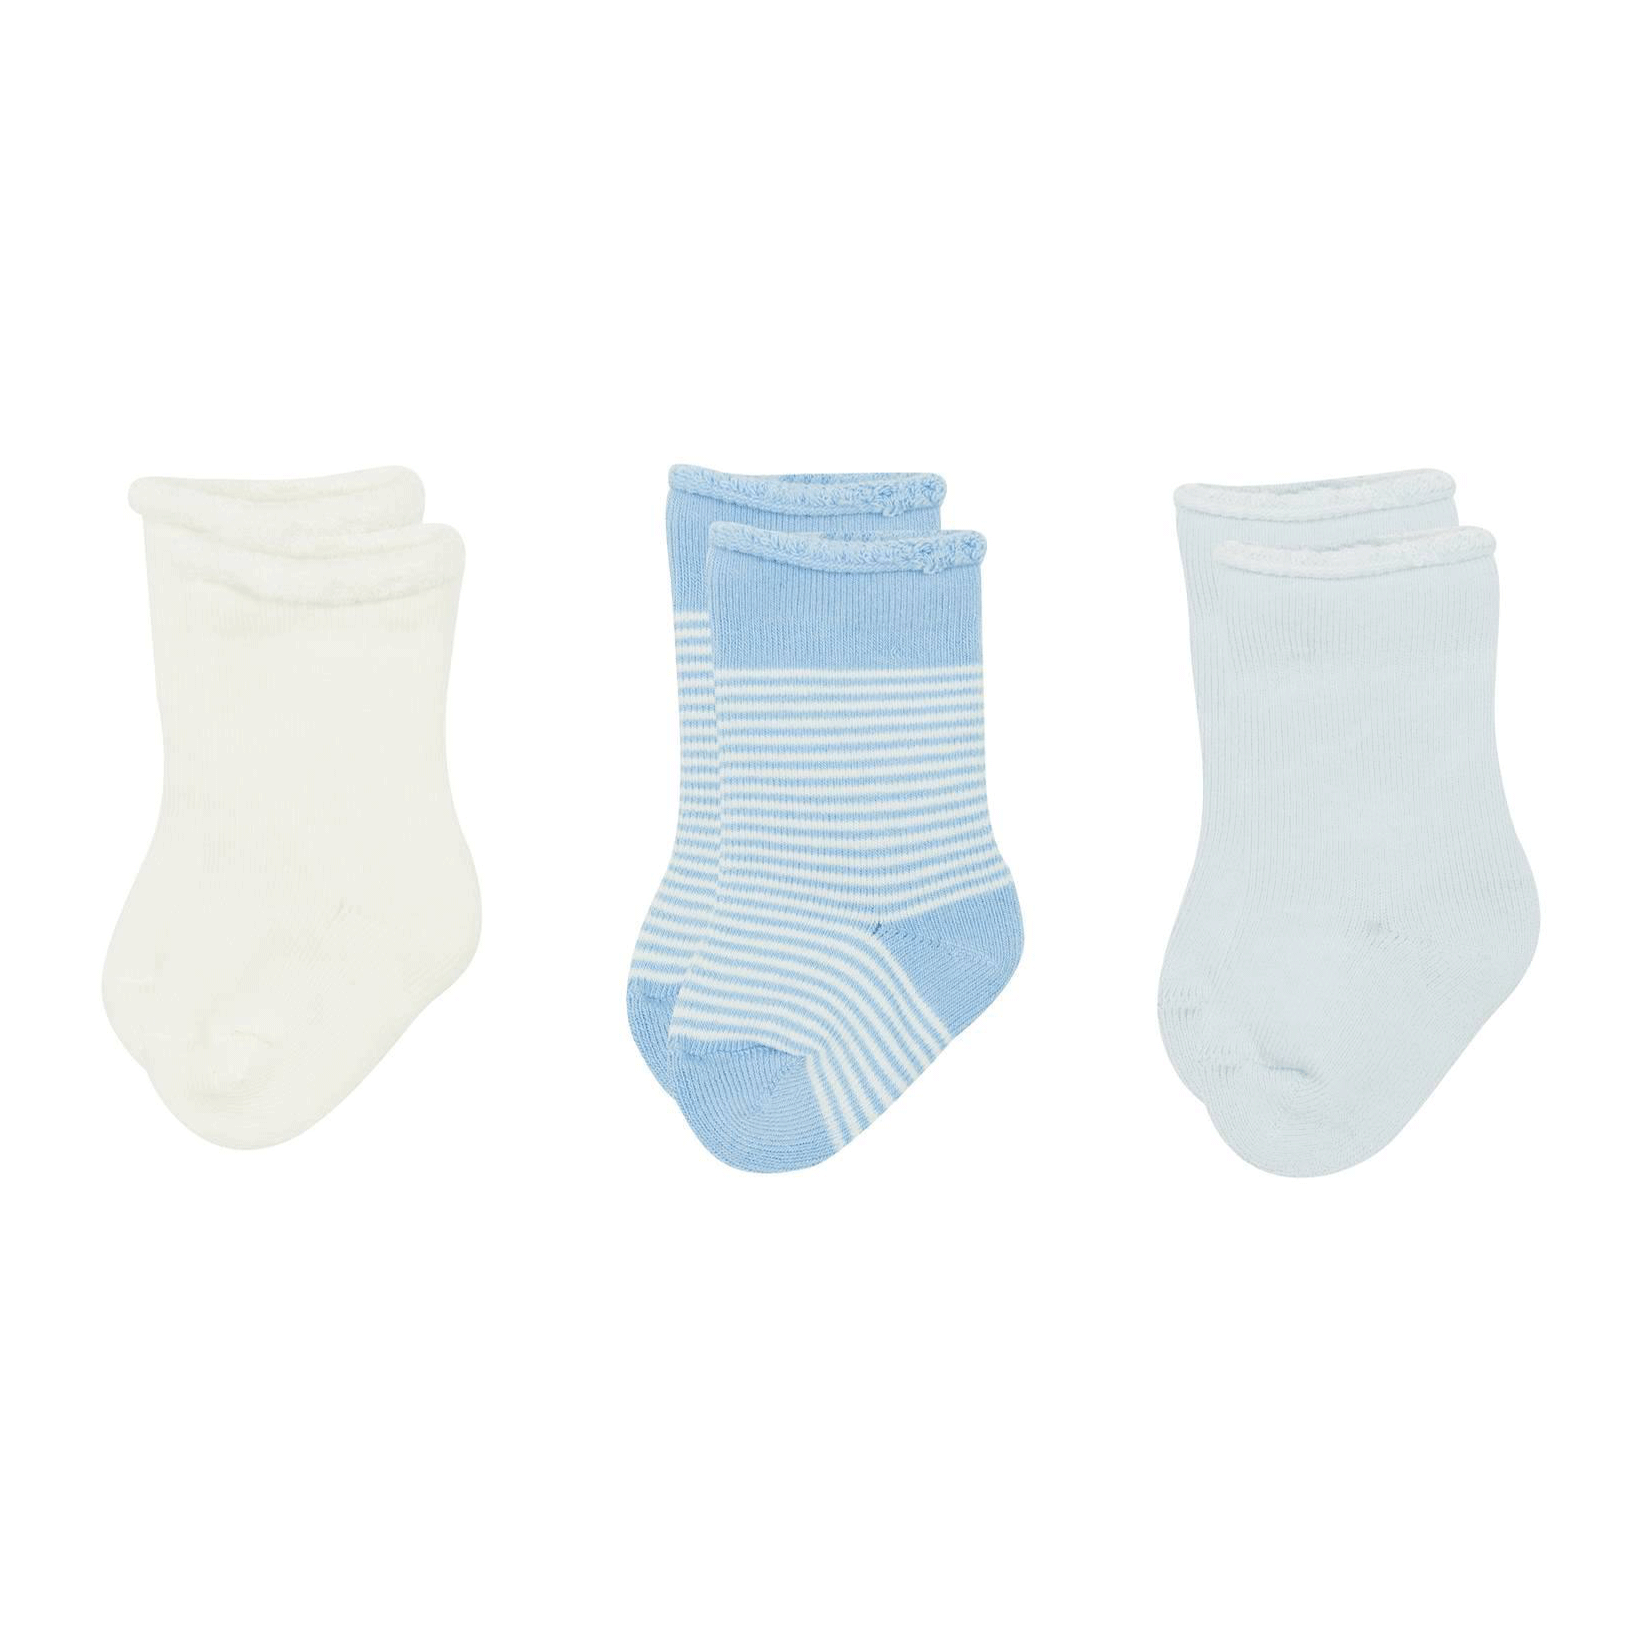 Petit Bateau Baby Boy socks at Bonjour Baby Baskets